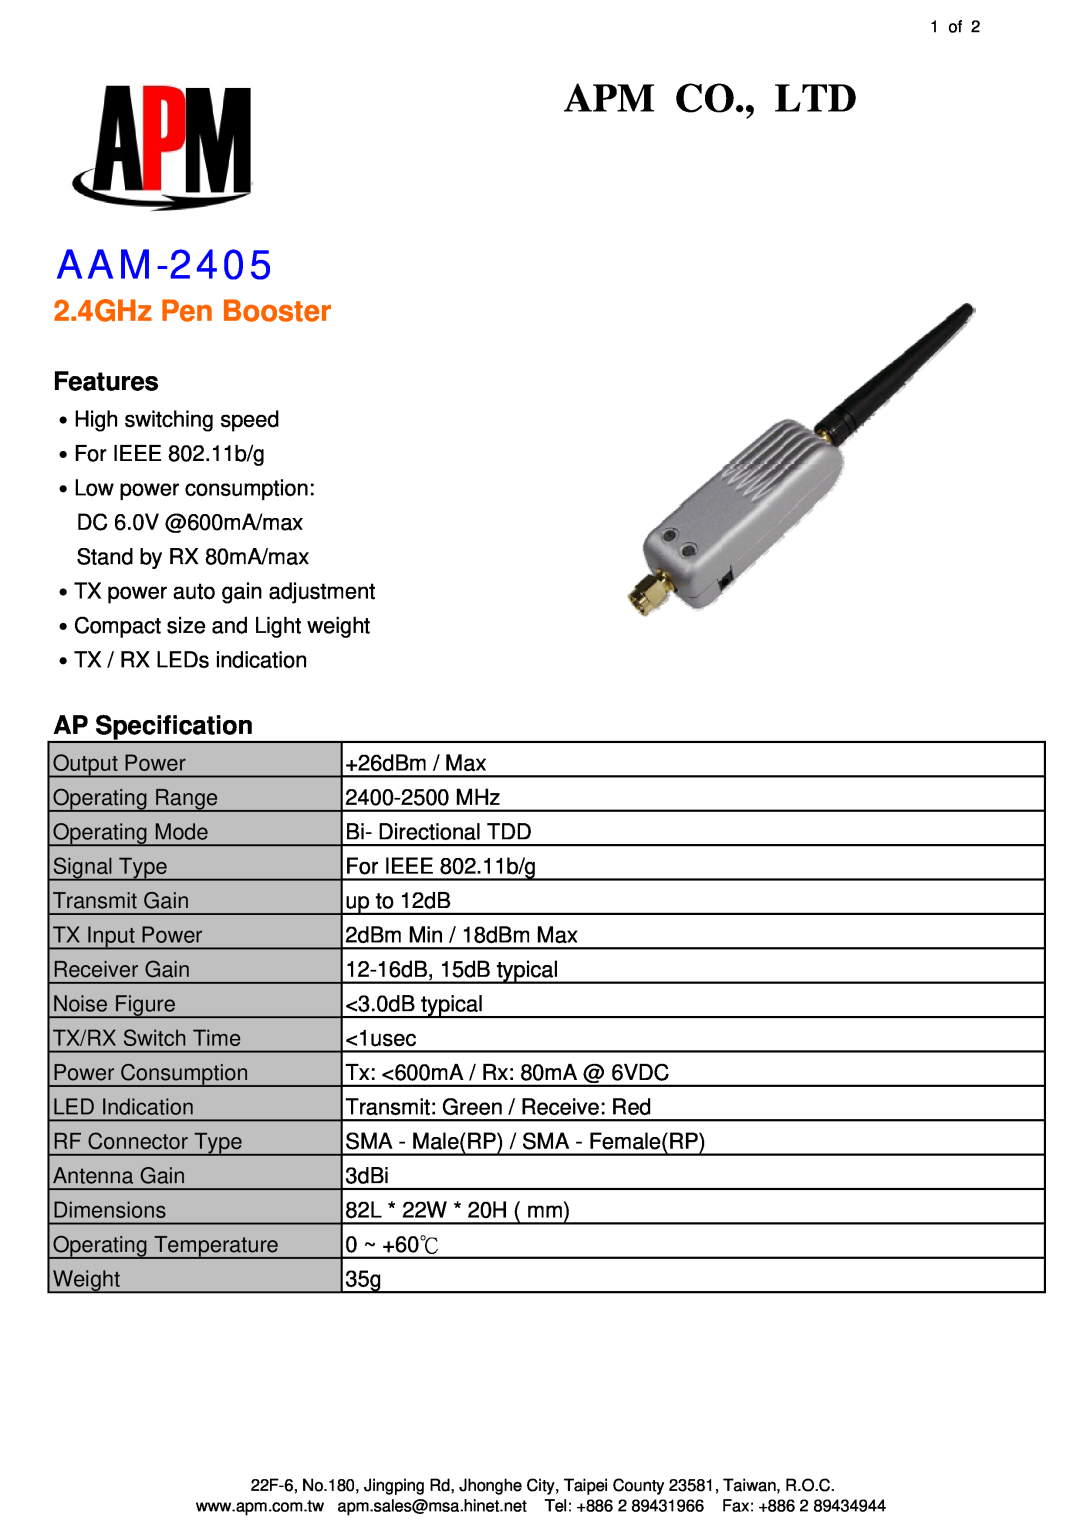 APM AAM-2405 dimensions Features, AP Specification, 2.4GHz Pen Booster 